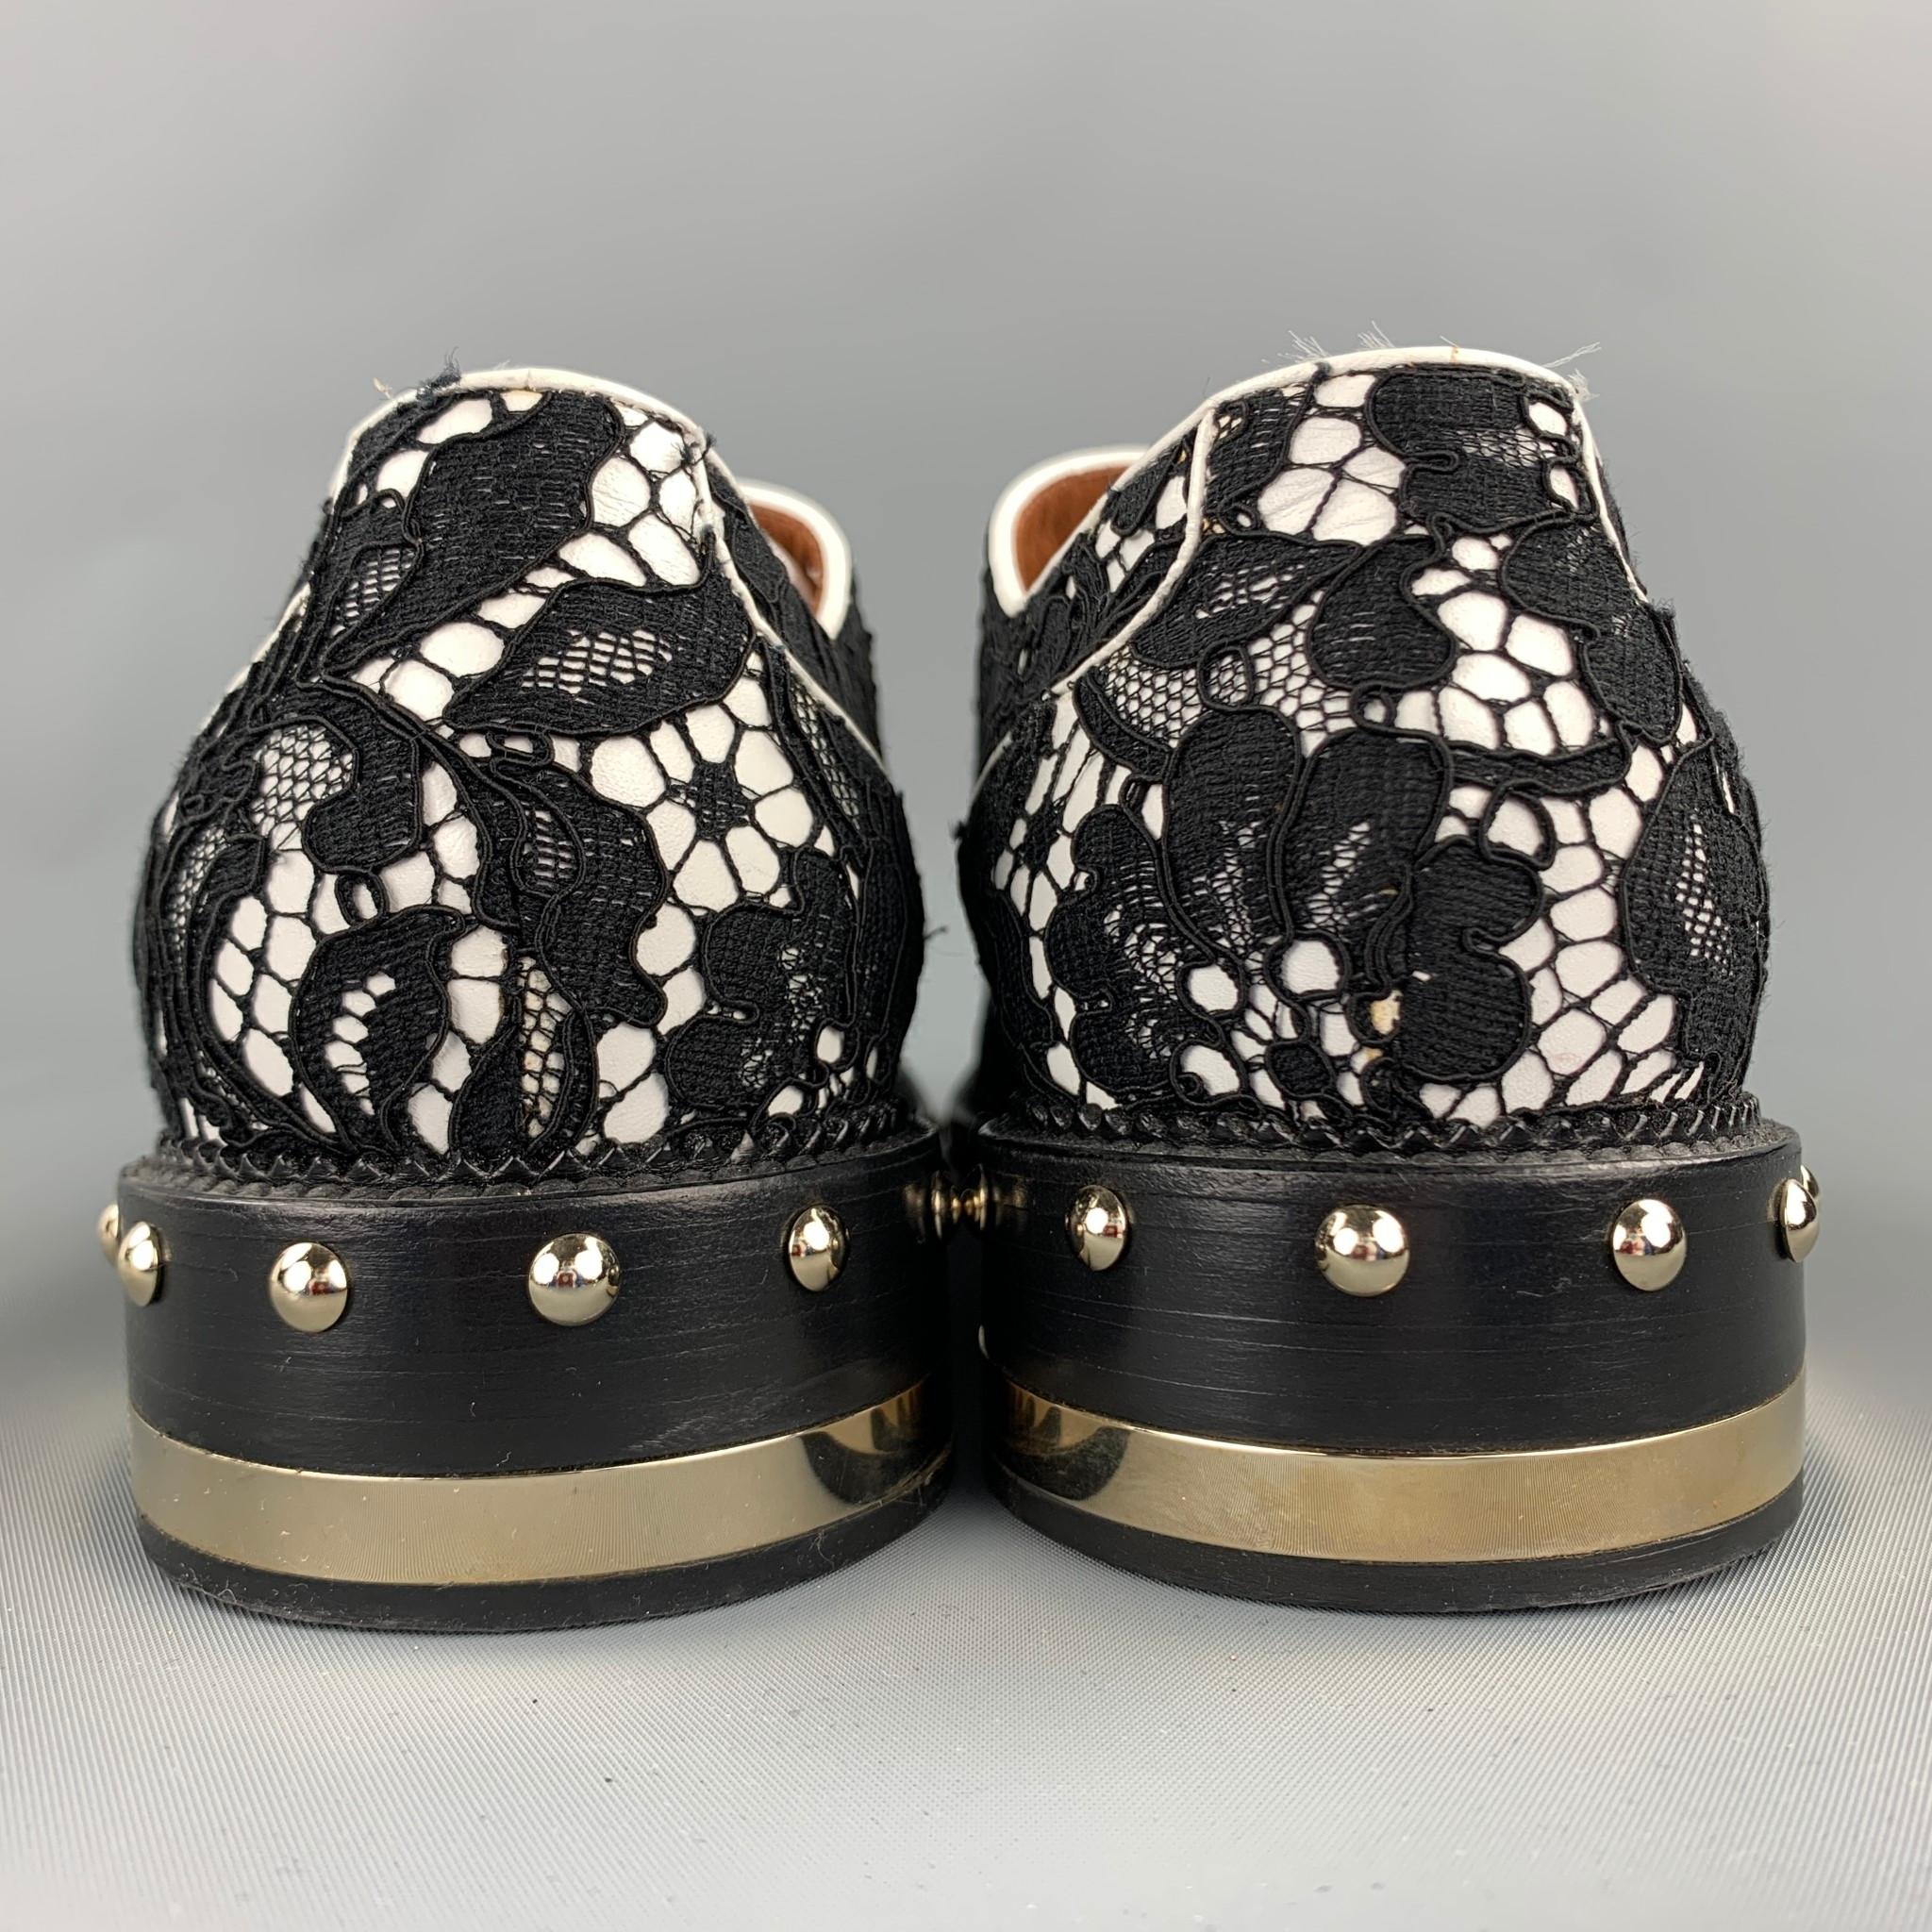 GIVENCHY Nika Size 7.5 Black & White Lace Leather Studded Lace Up Shoes 1